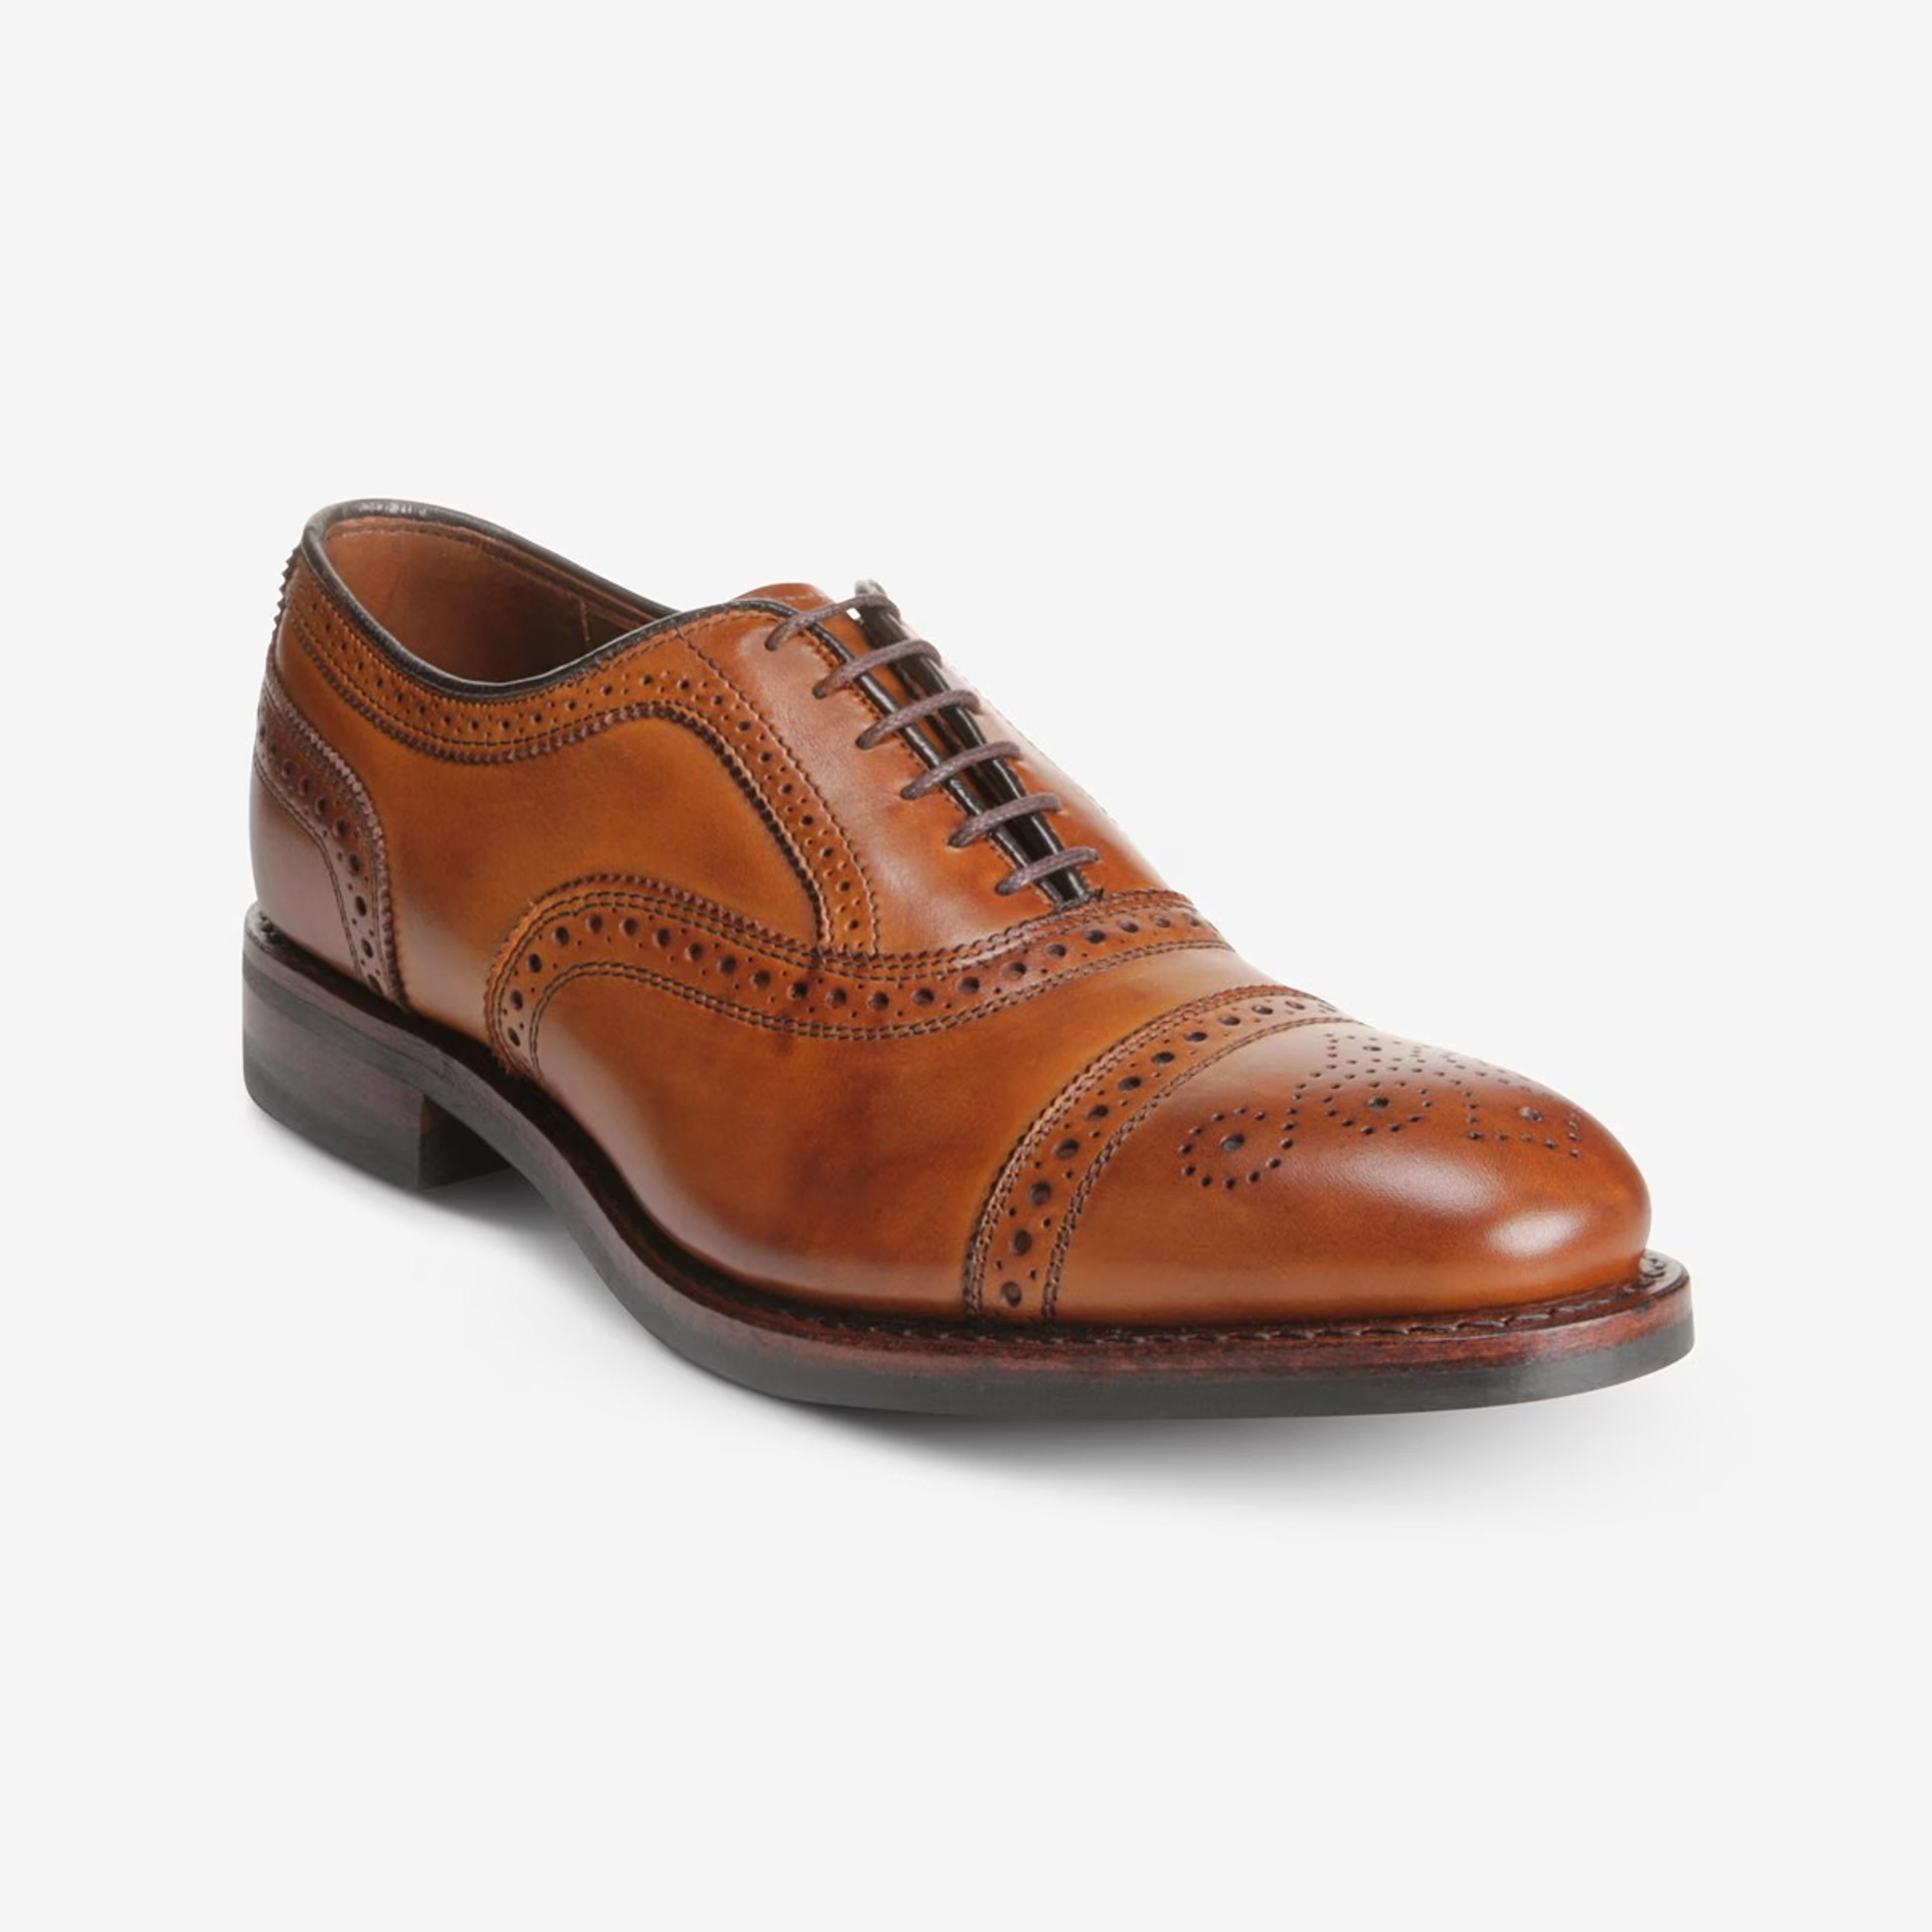 allenedmonds.com/product/mens-strand-cap-toe-oxford-dress-shoe-with-dainite-sole-3023098/walnut-brown-ec4001550